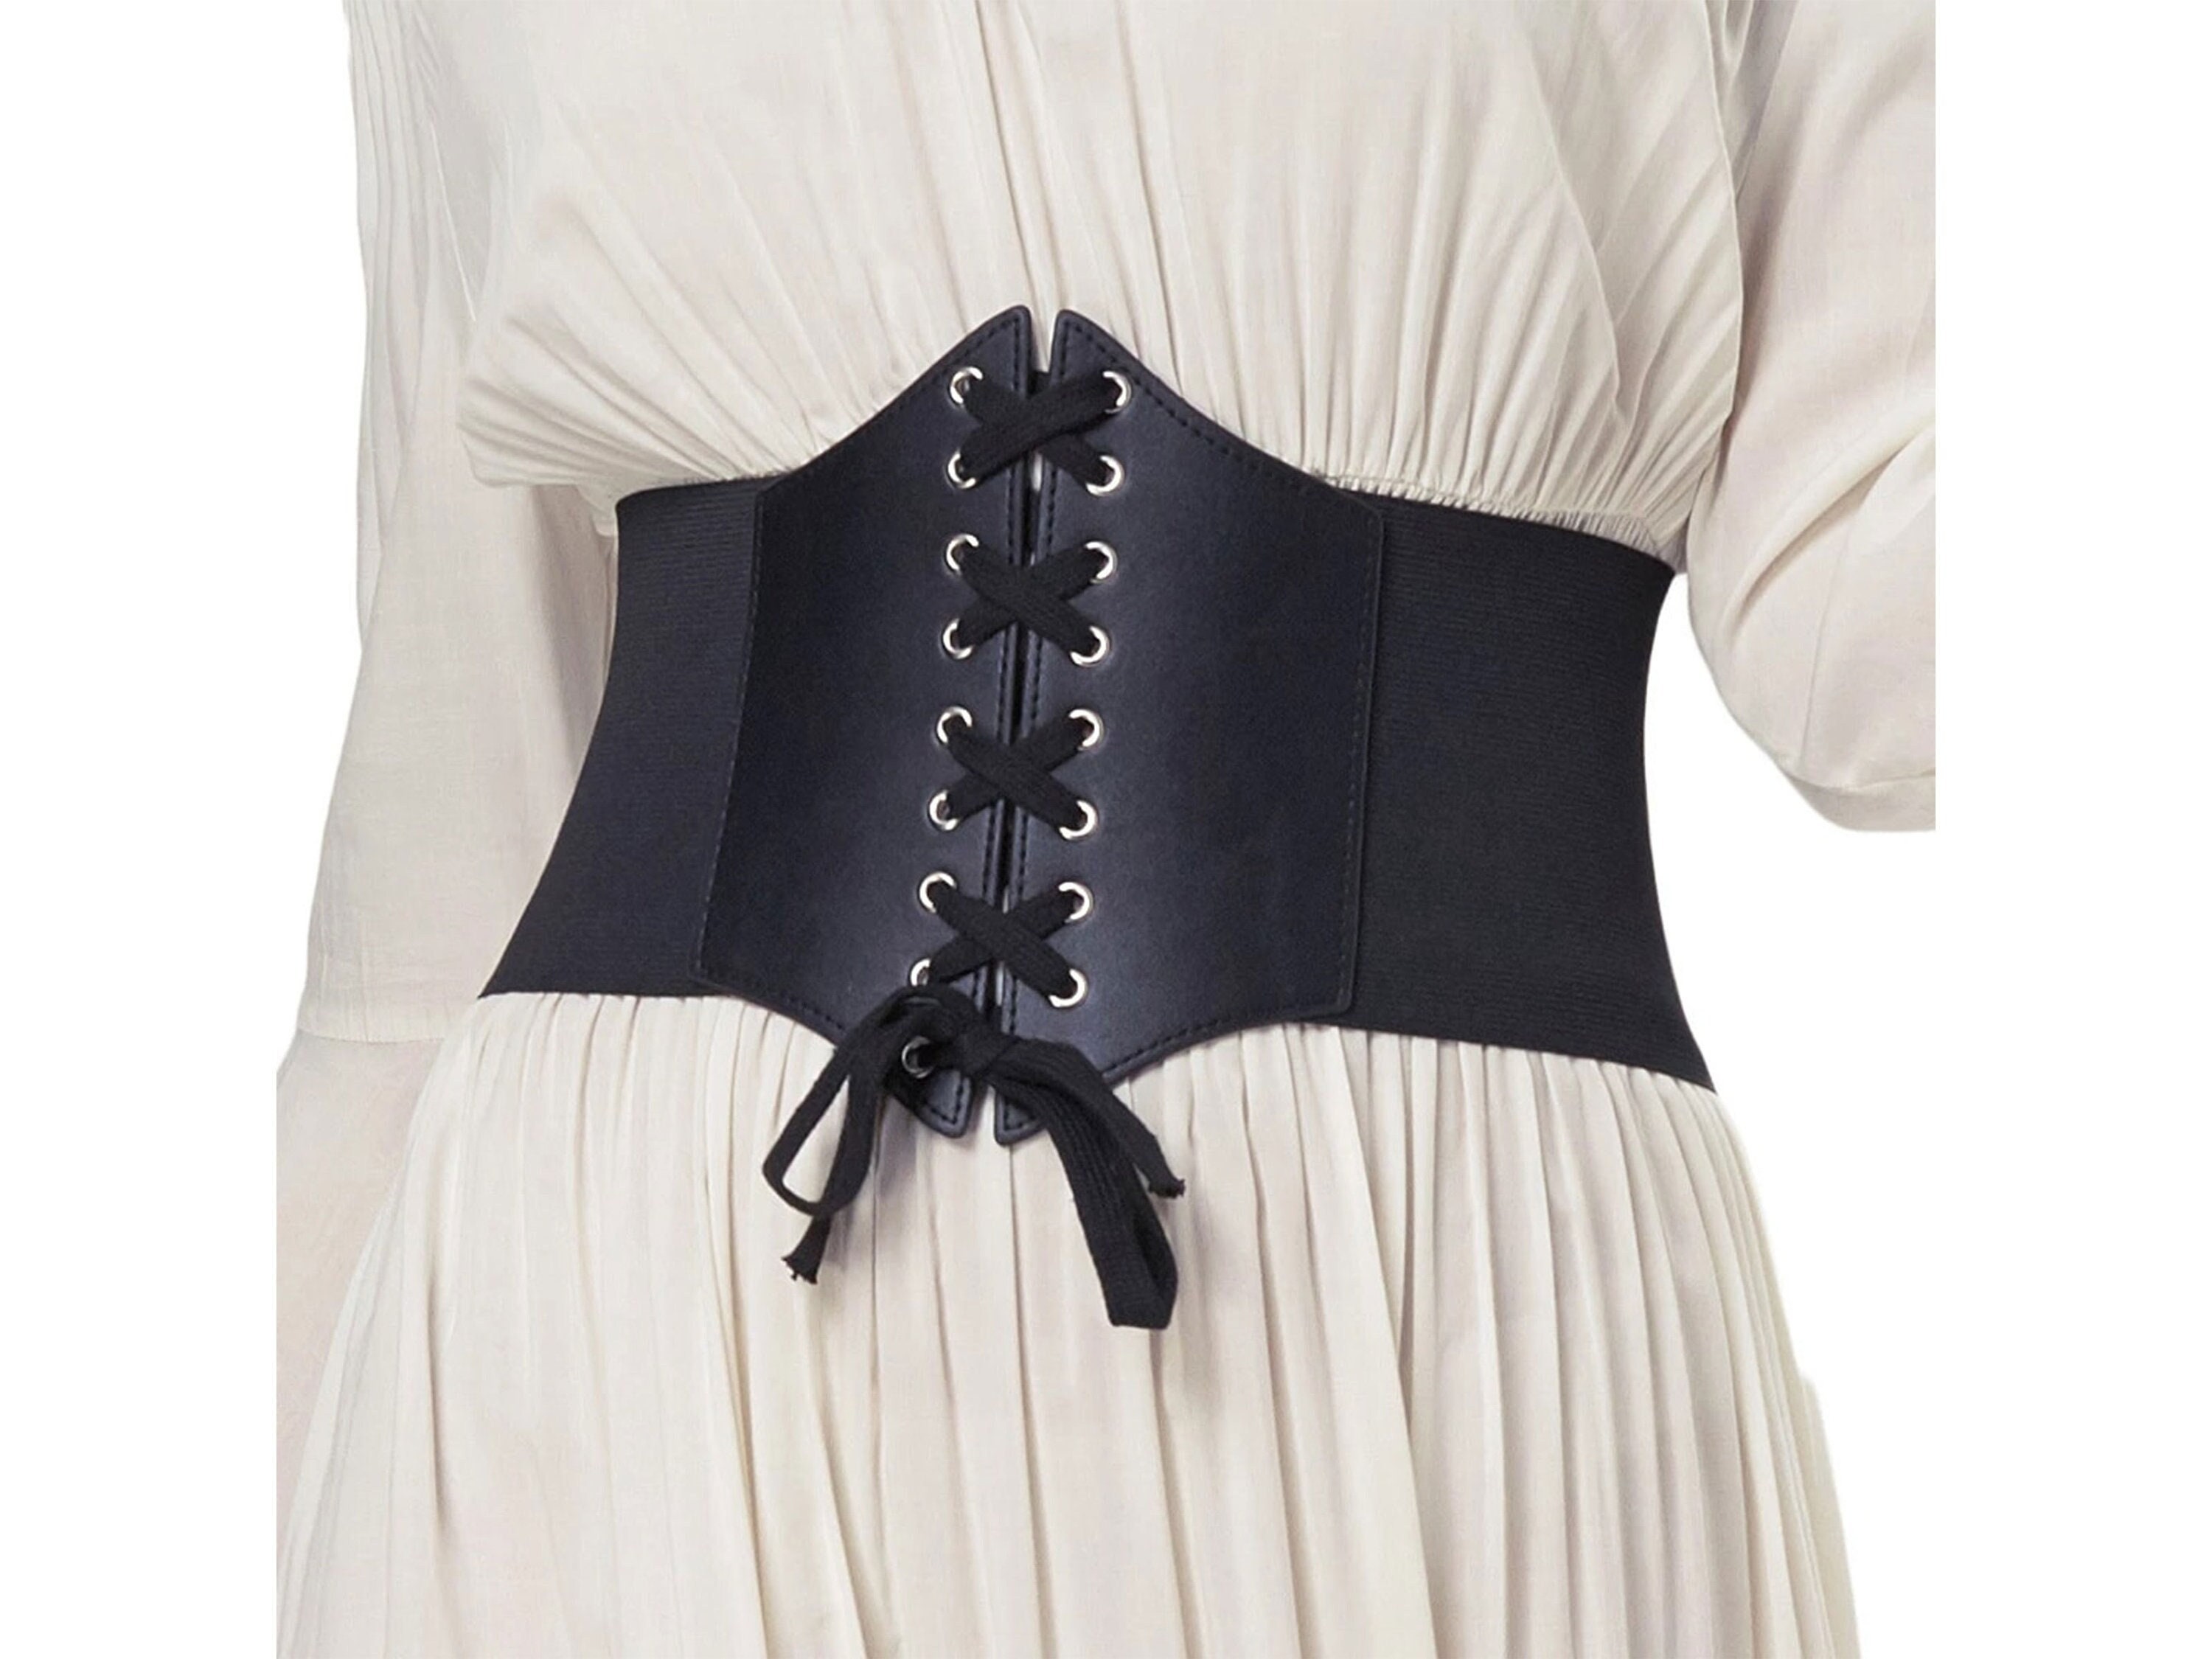 LUCHENGYI Women Stretchy Vintage Belt for Dresses Elastic Waist Wide Cinch  Metal Buckle Ladies Belts Black White Plus Size 3 inch Wide Apricot M